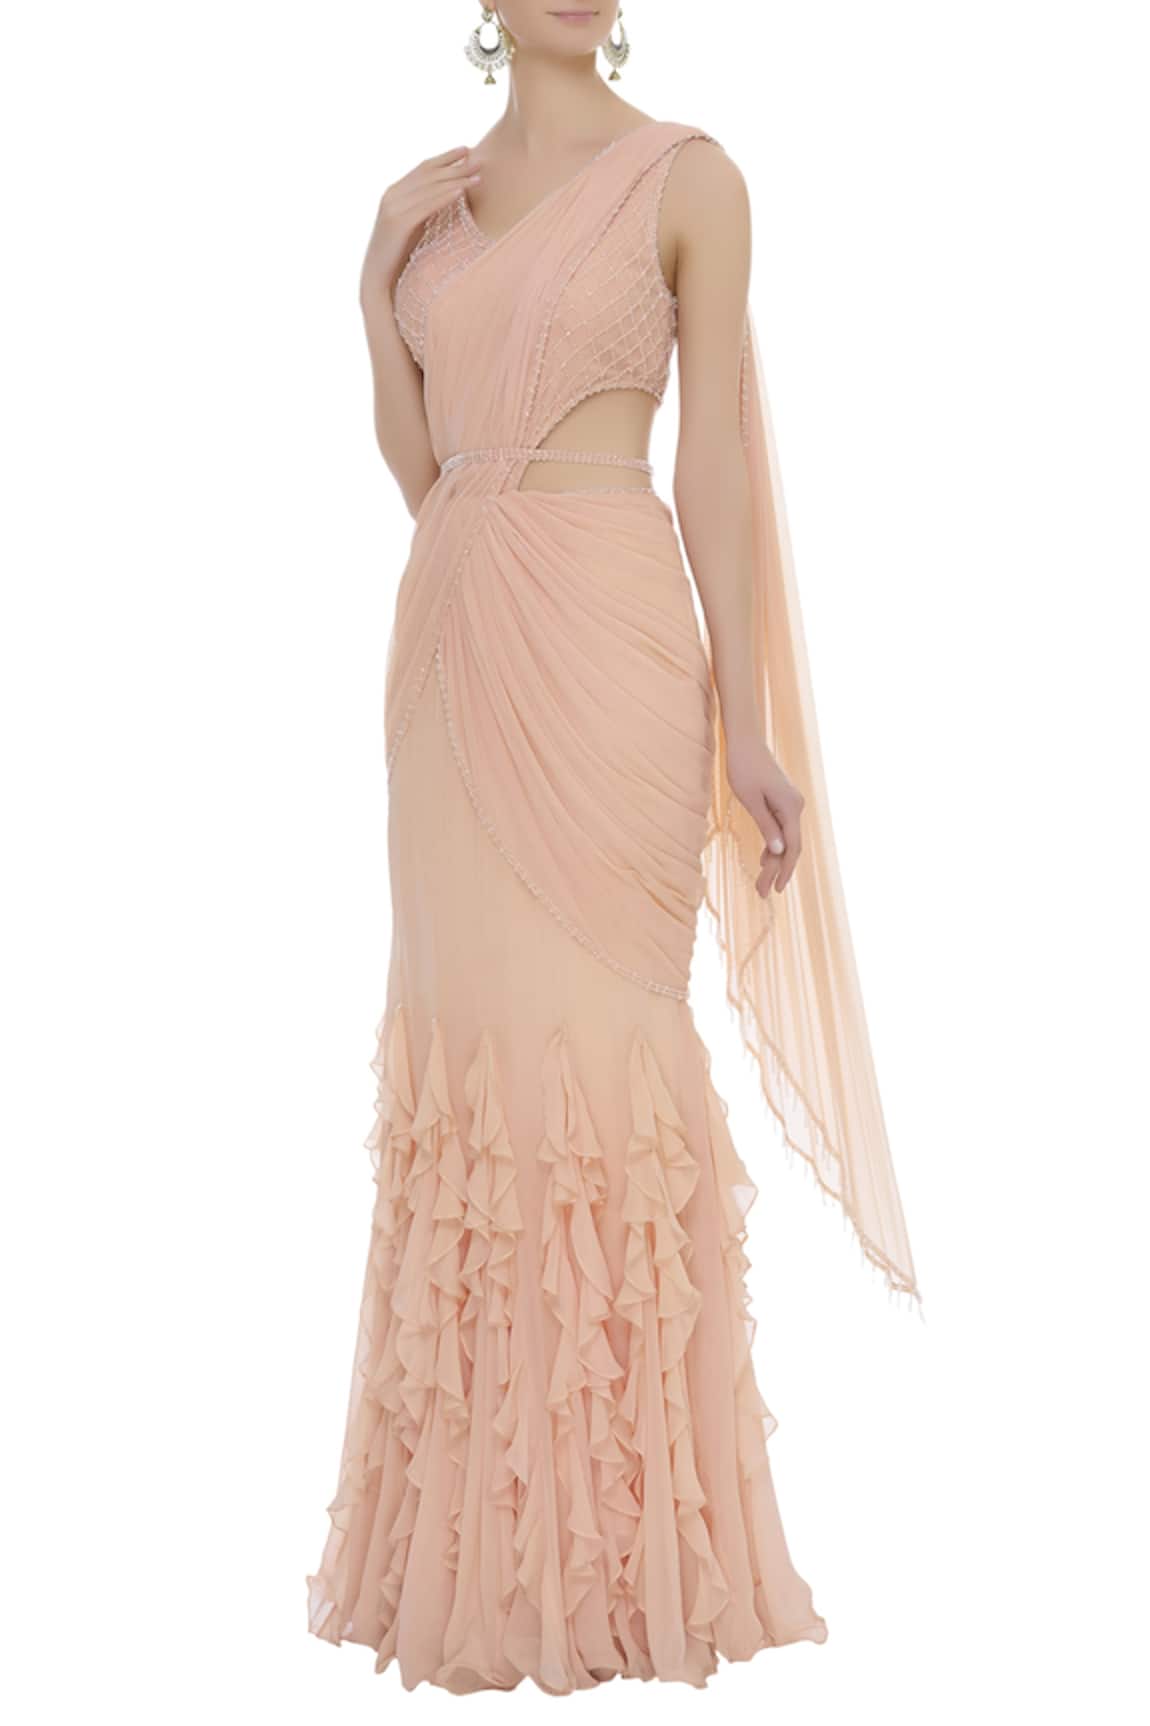 ARPAN VOHRA Embellished Saree Gown 